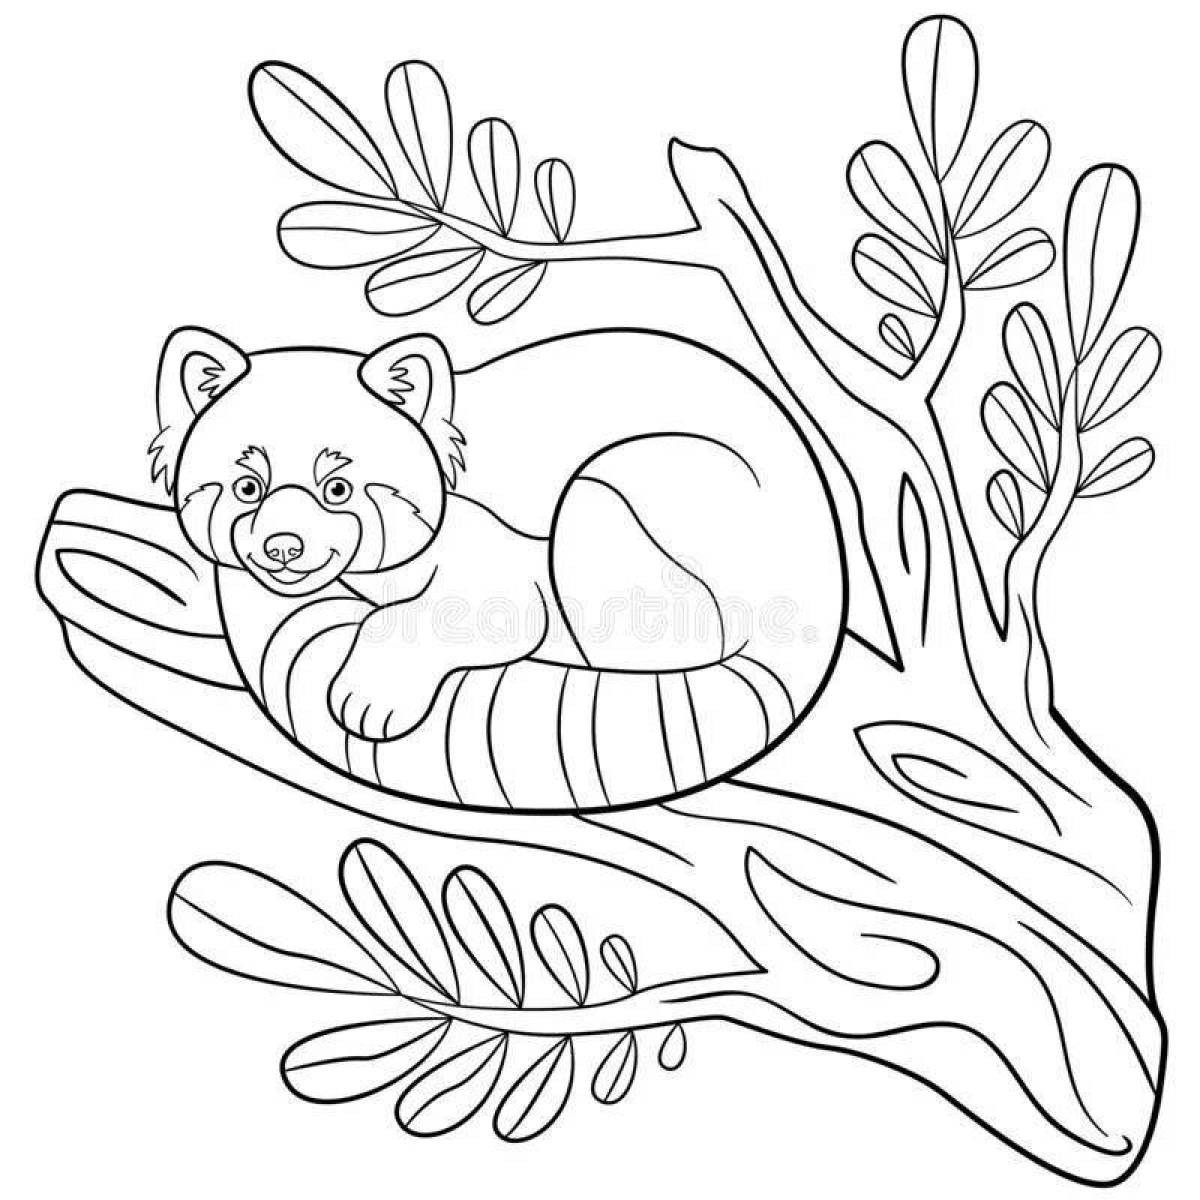 Little panda coloring book